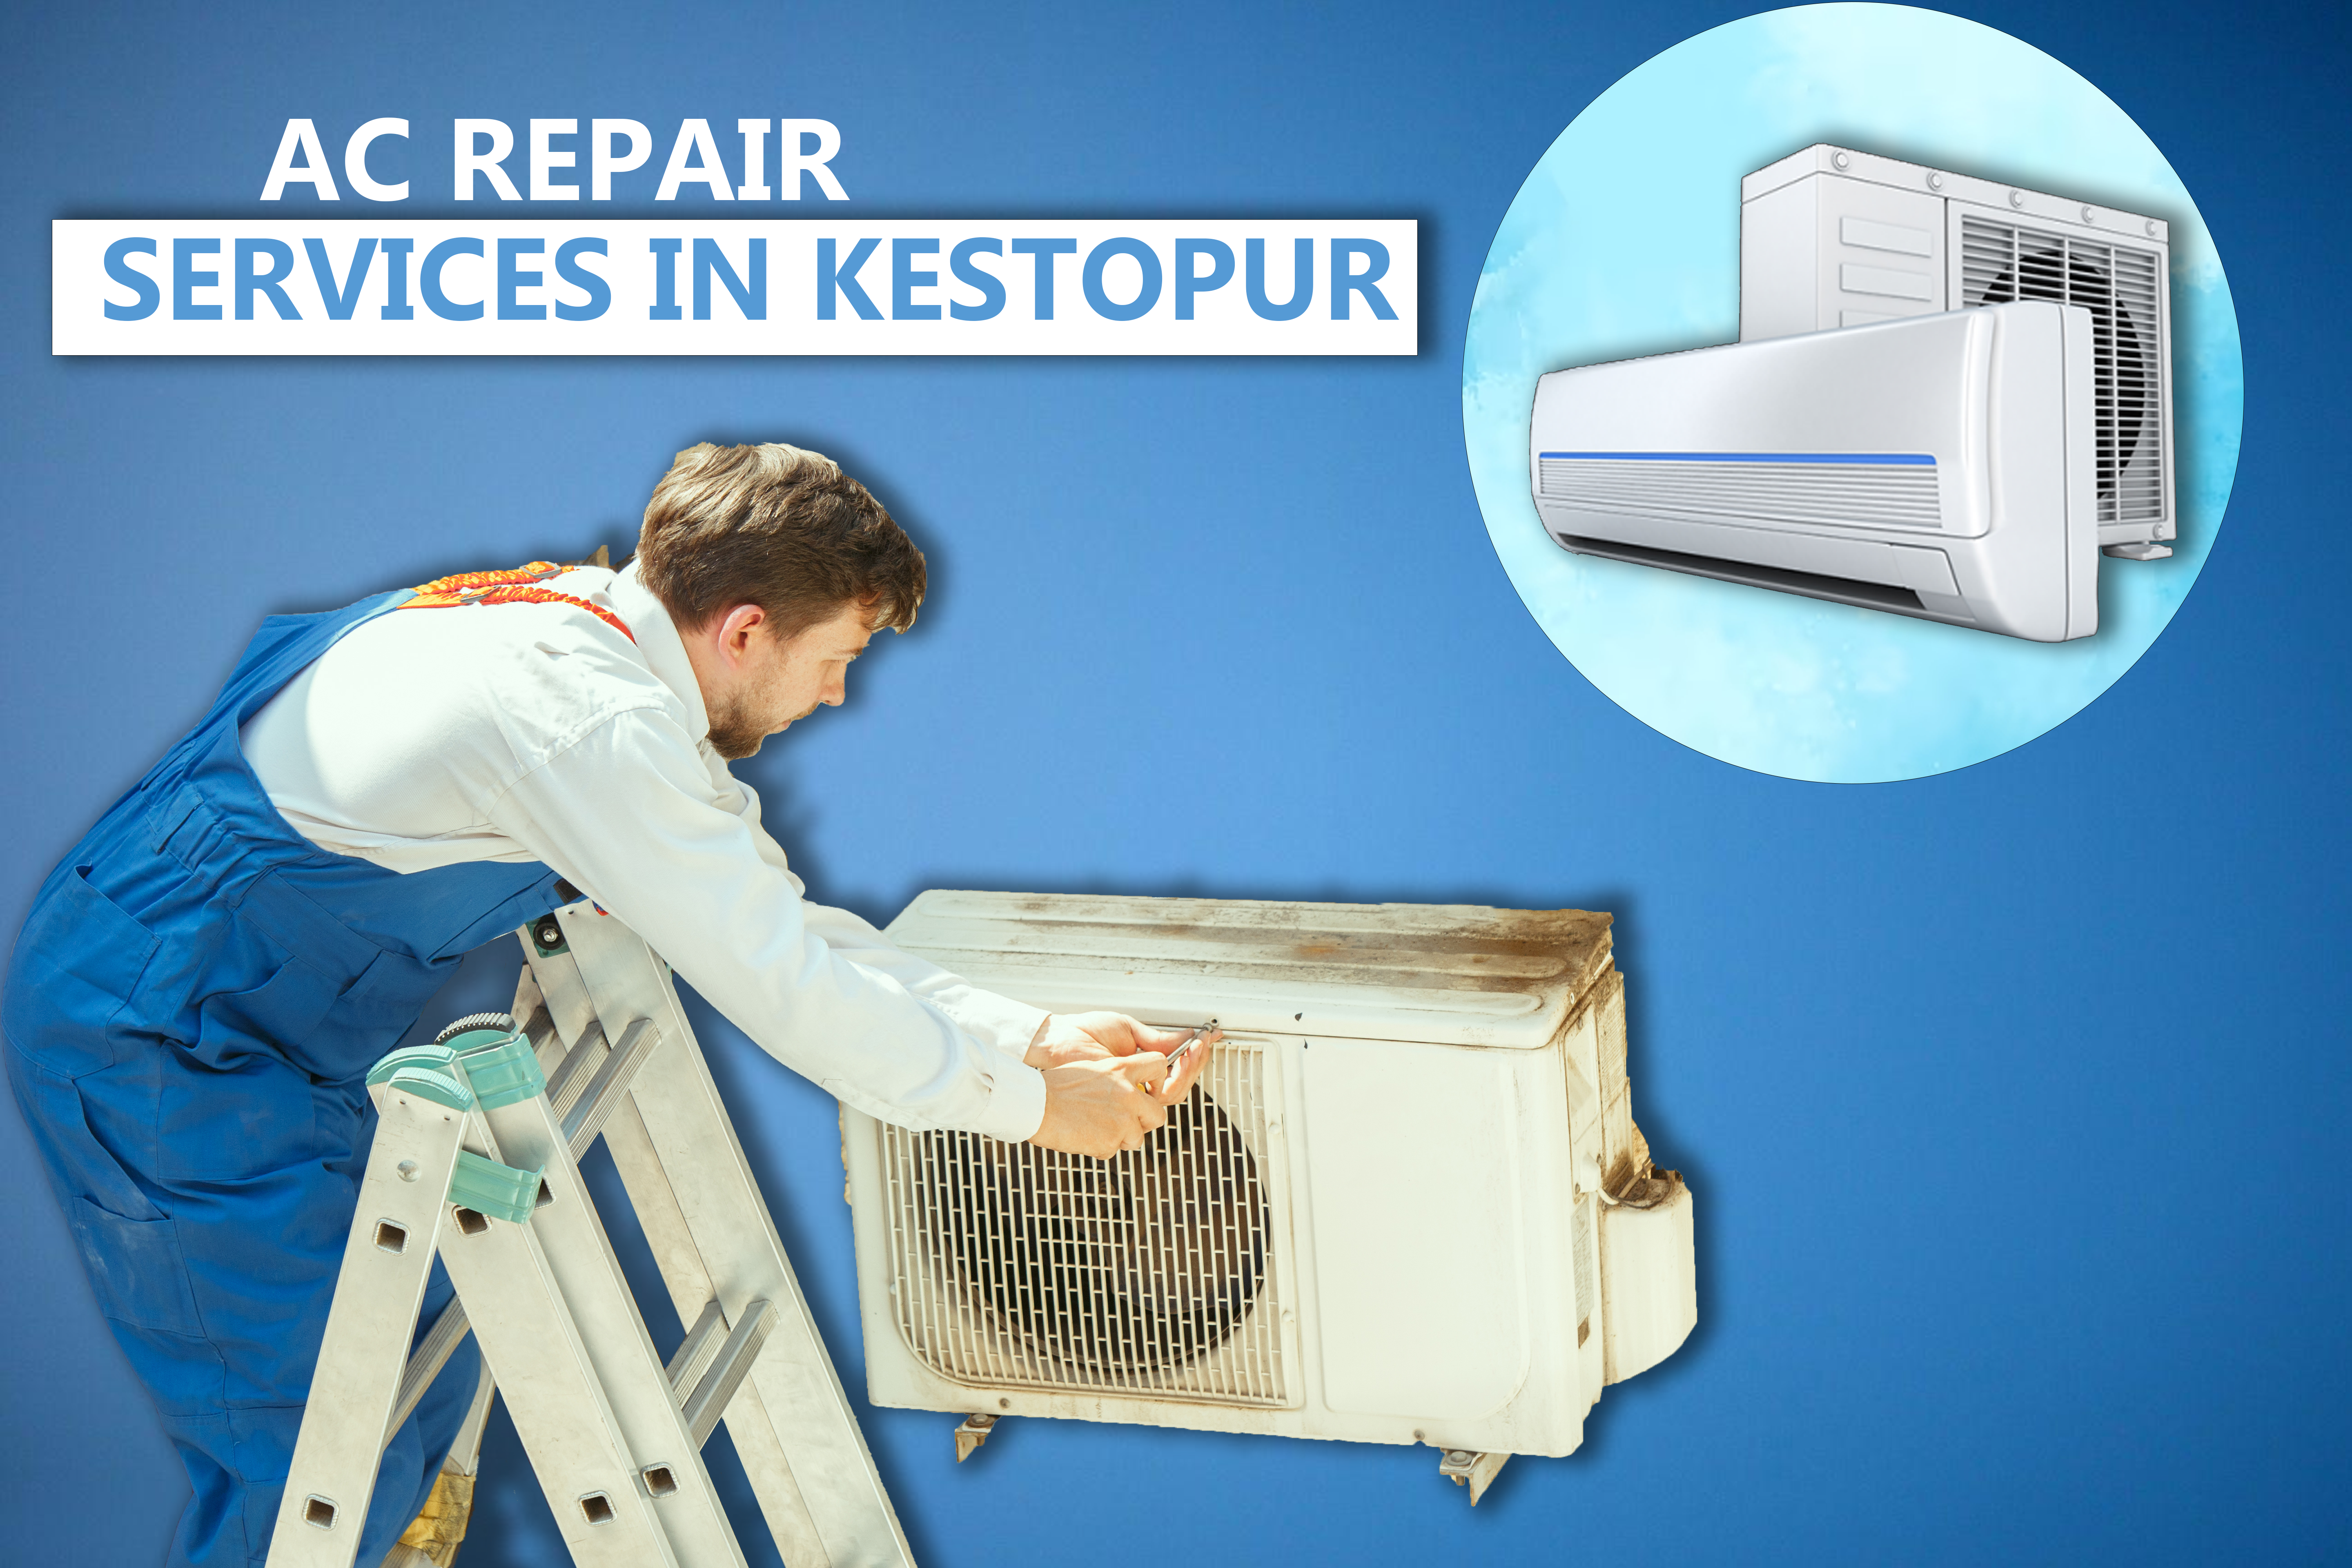 AC repair Services in Kestopur